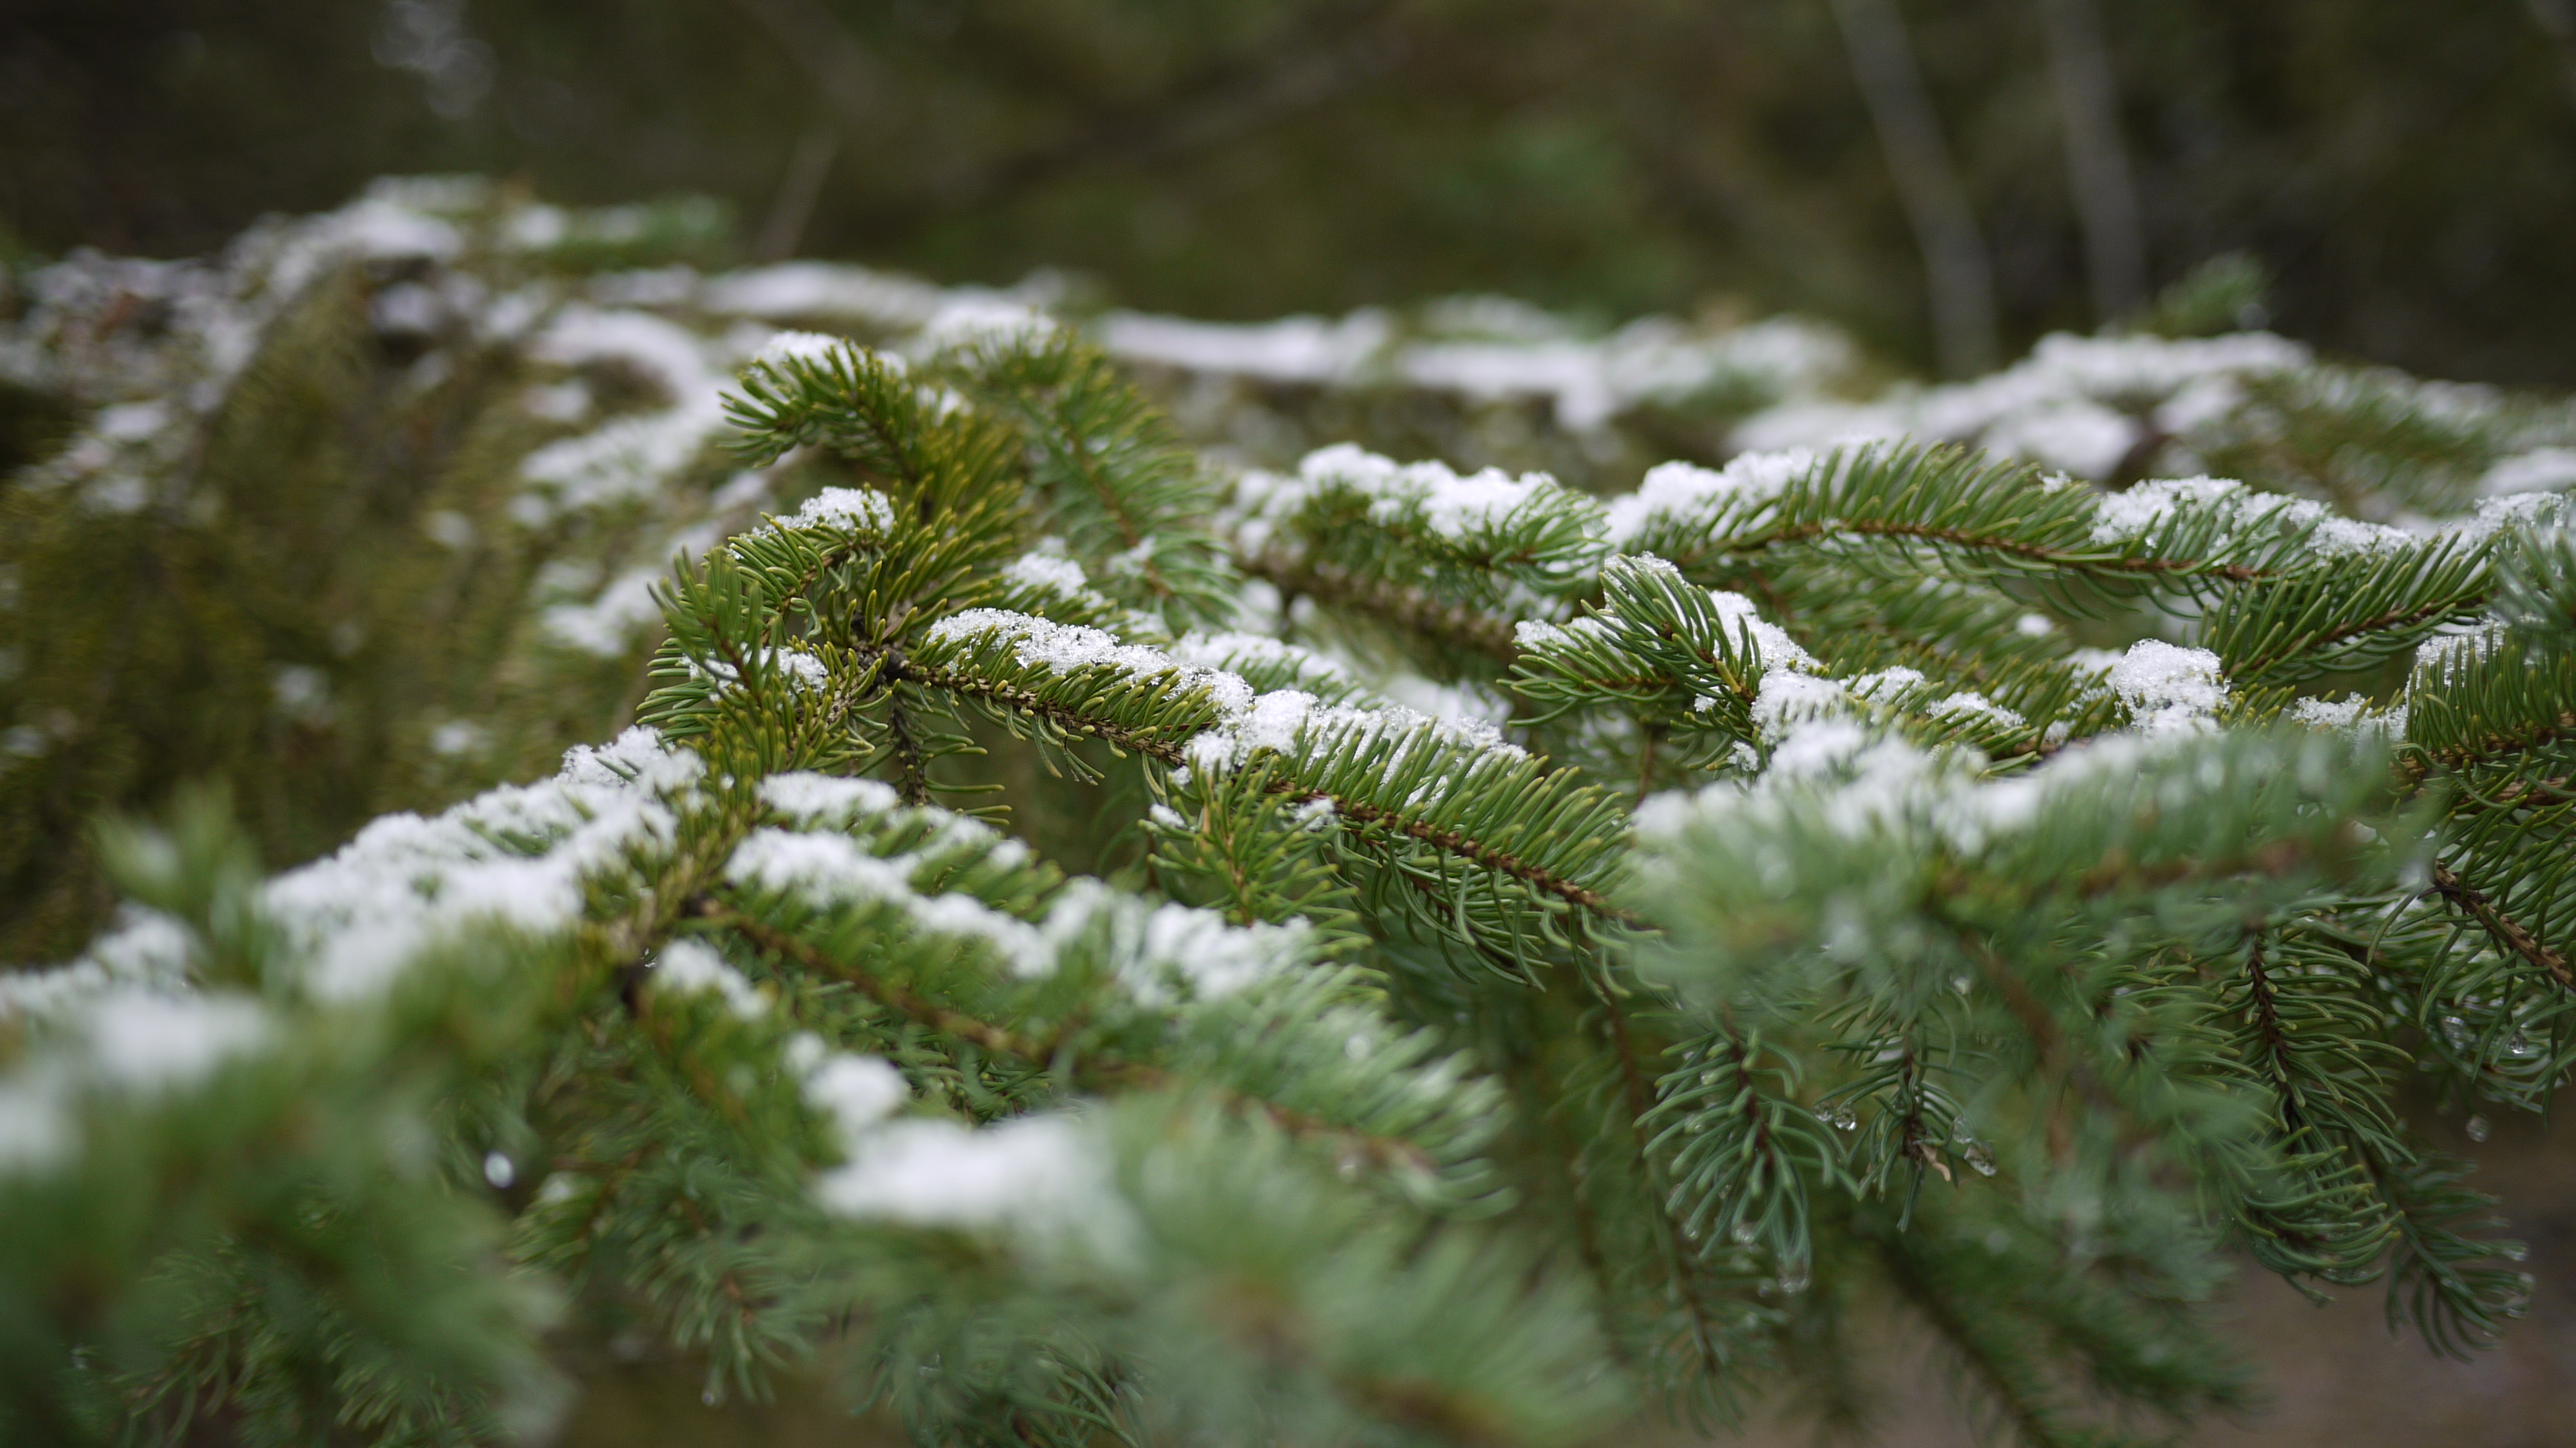 winter pine trees